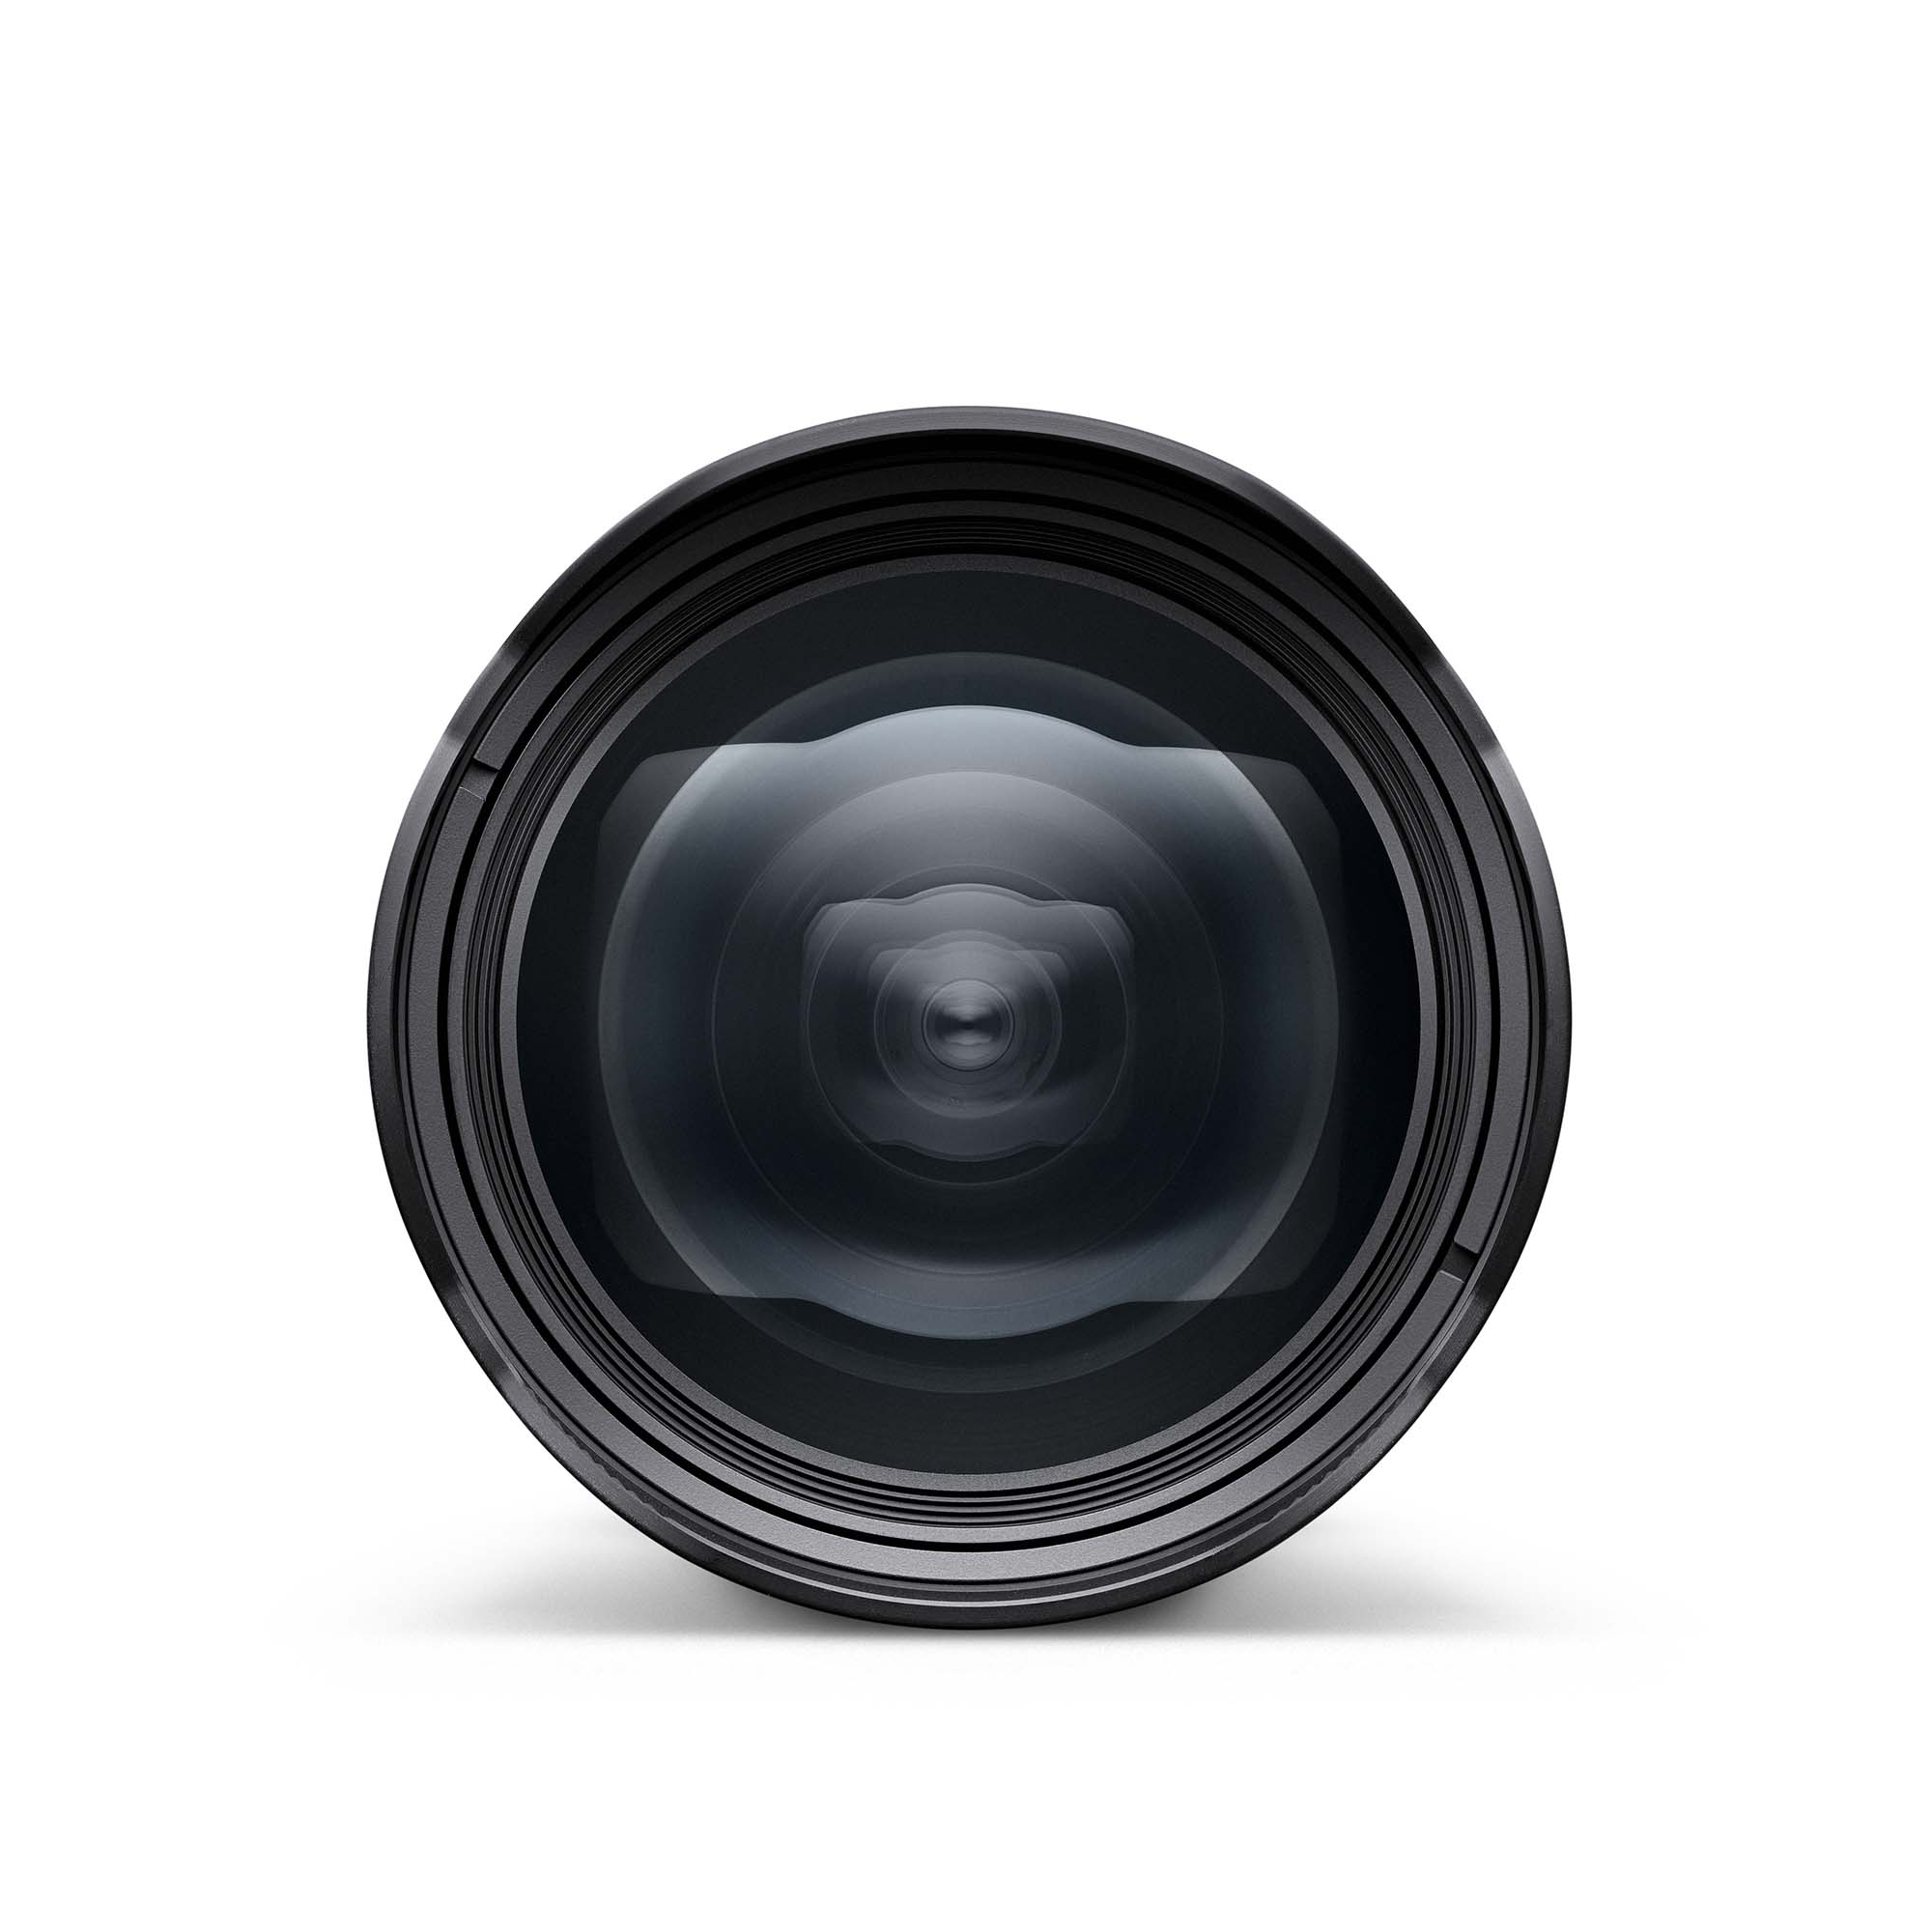 Leica Super-Vario-Elmarit-SL 14-24mm f/2,8 ASPH